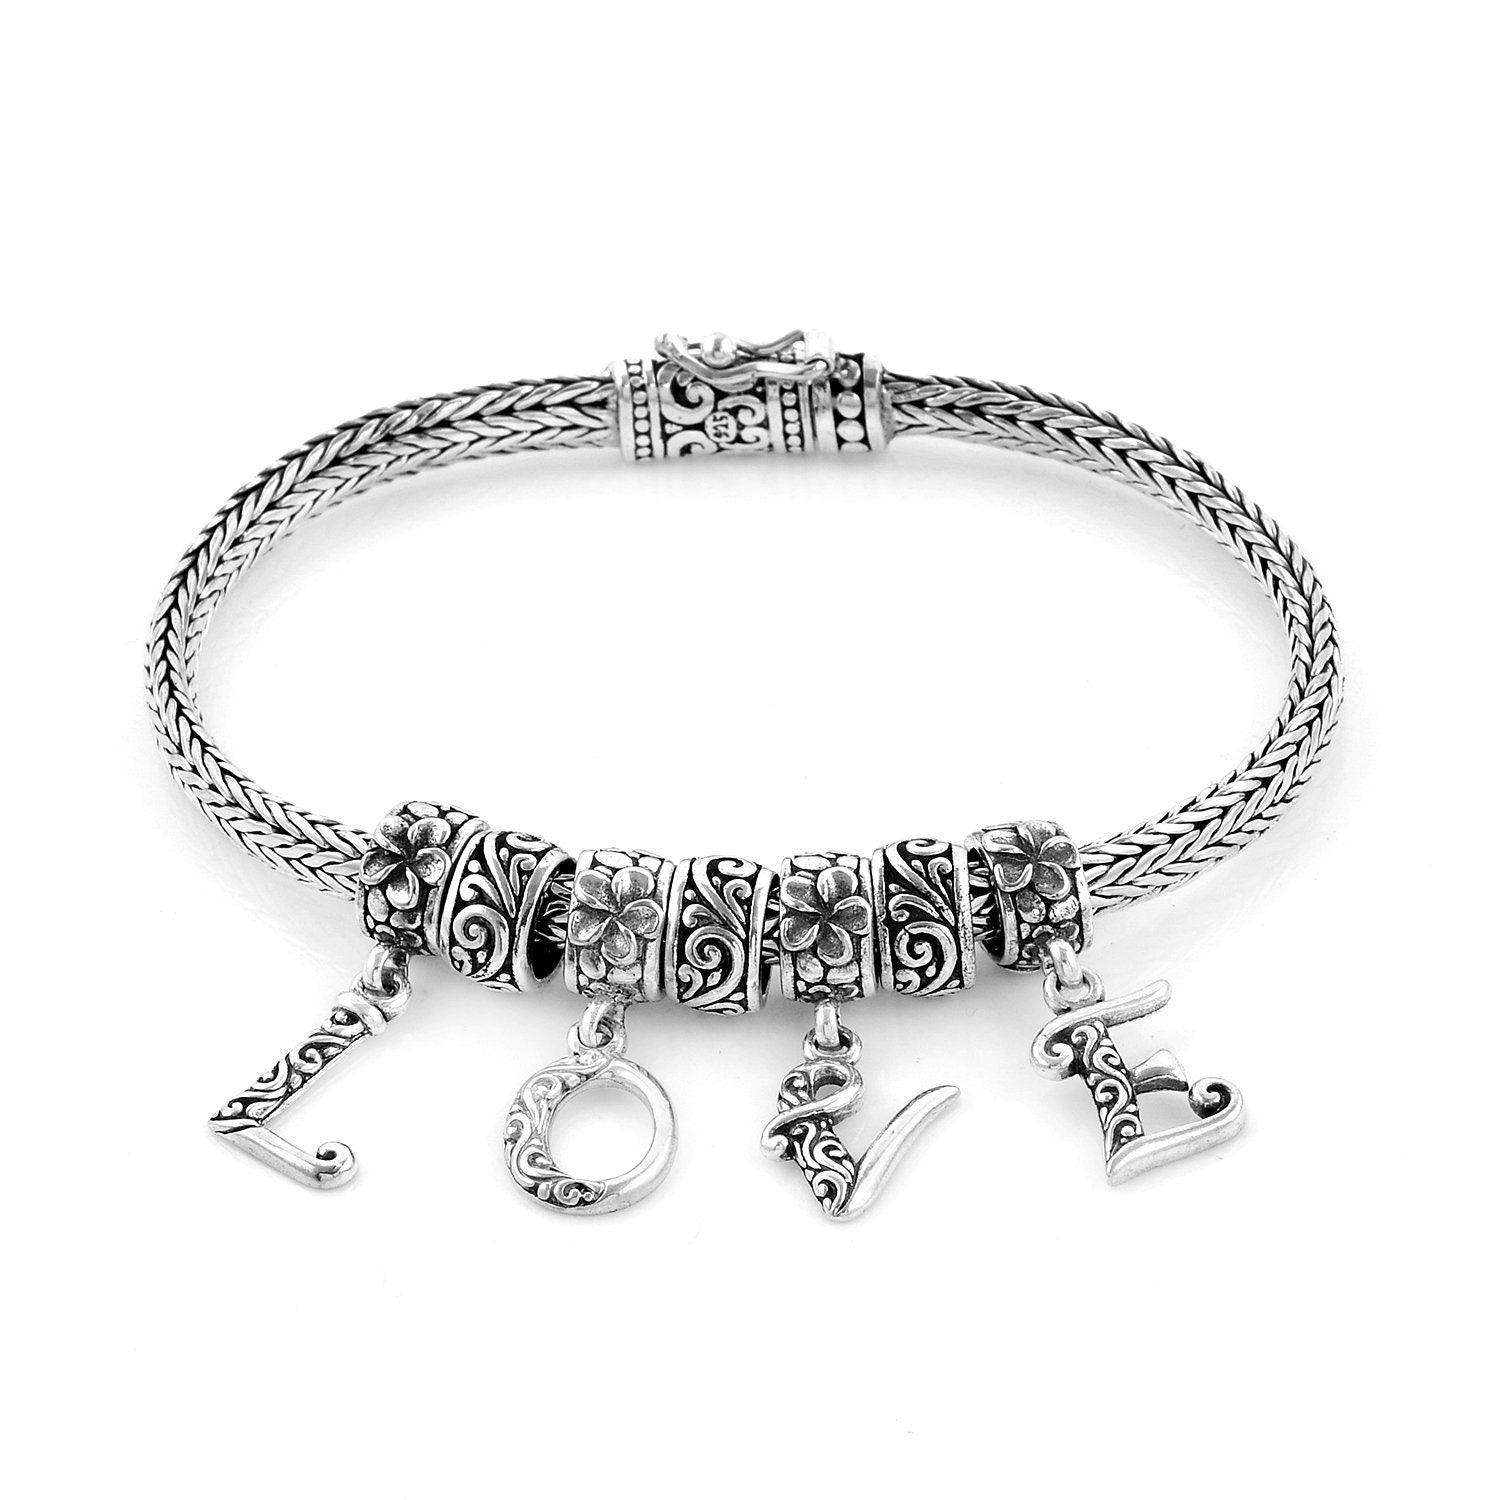 LOVE Charm Snake Chain Bracelet Inspiring Bracelet in Solid 925 Sterling Silver - Inspiring Jewellery - Inspiring Jewellery